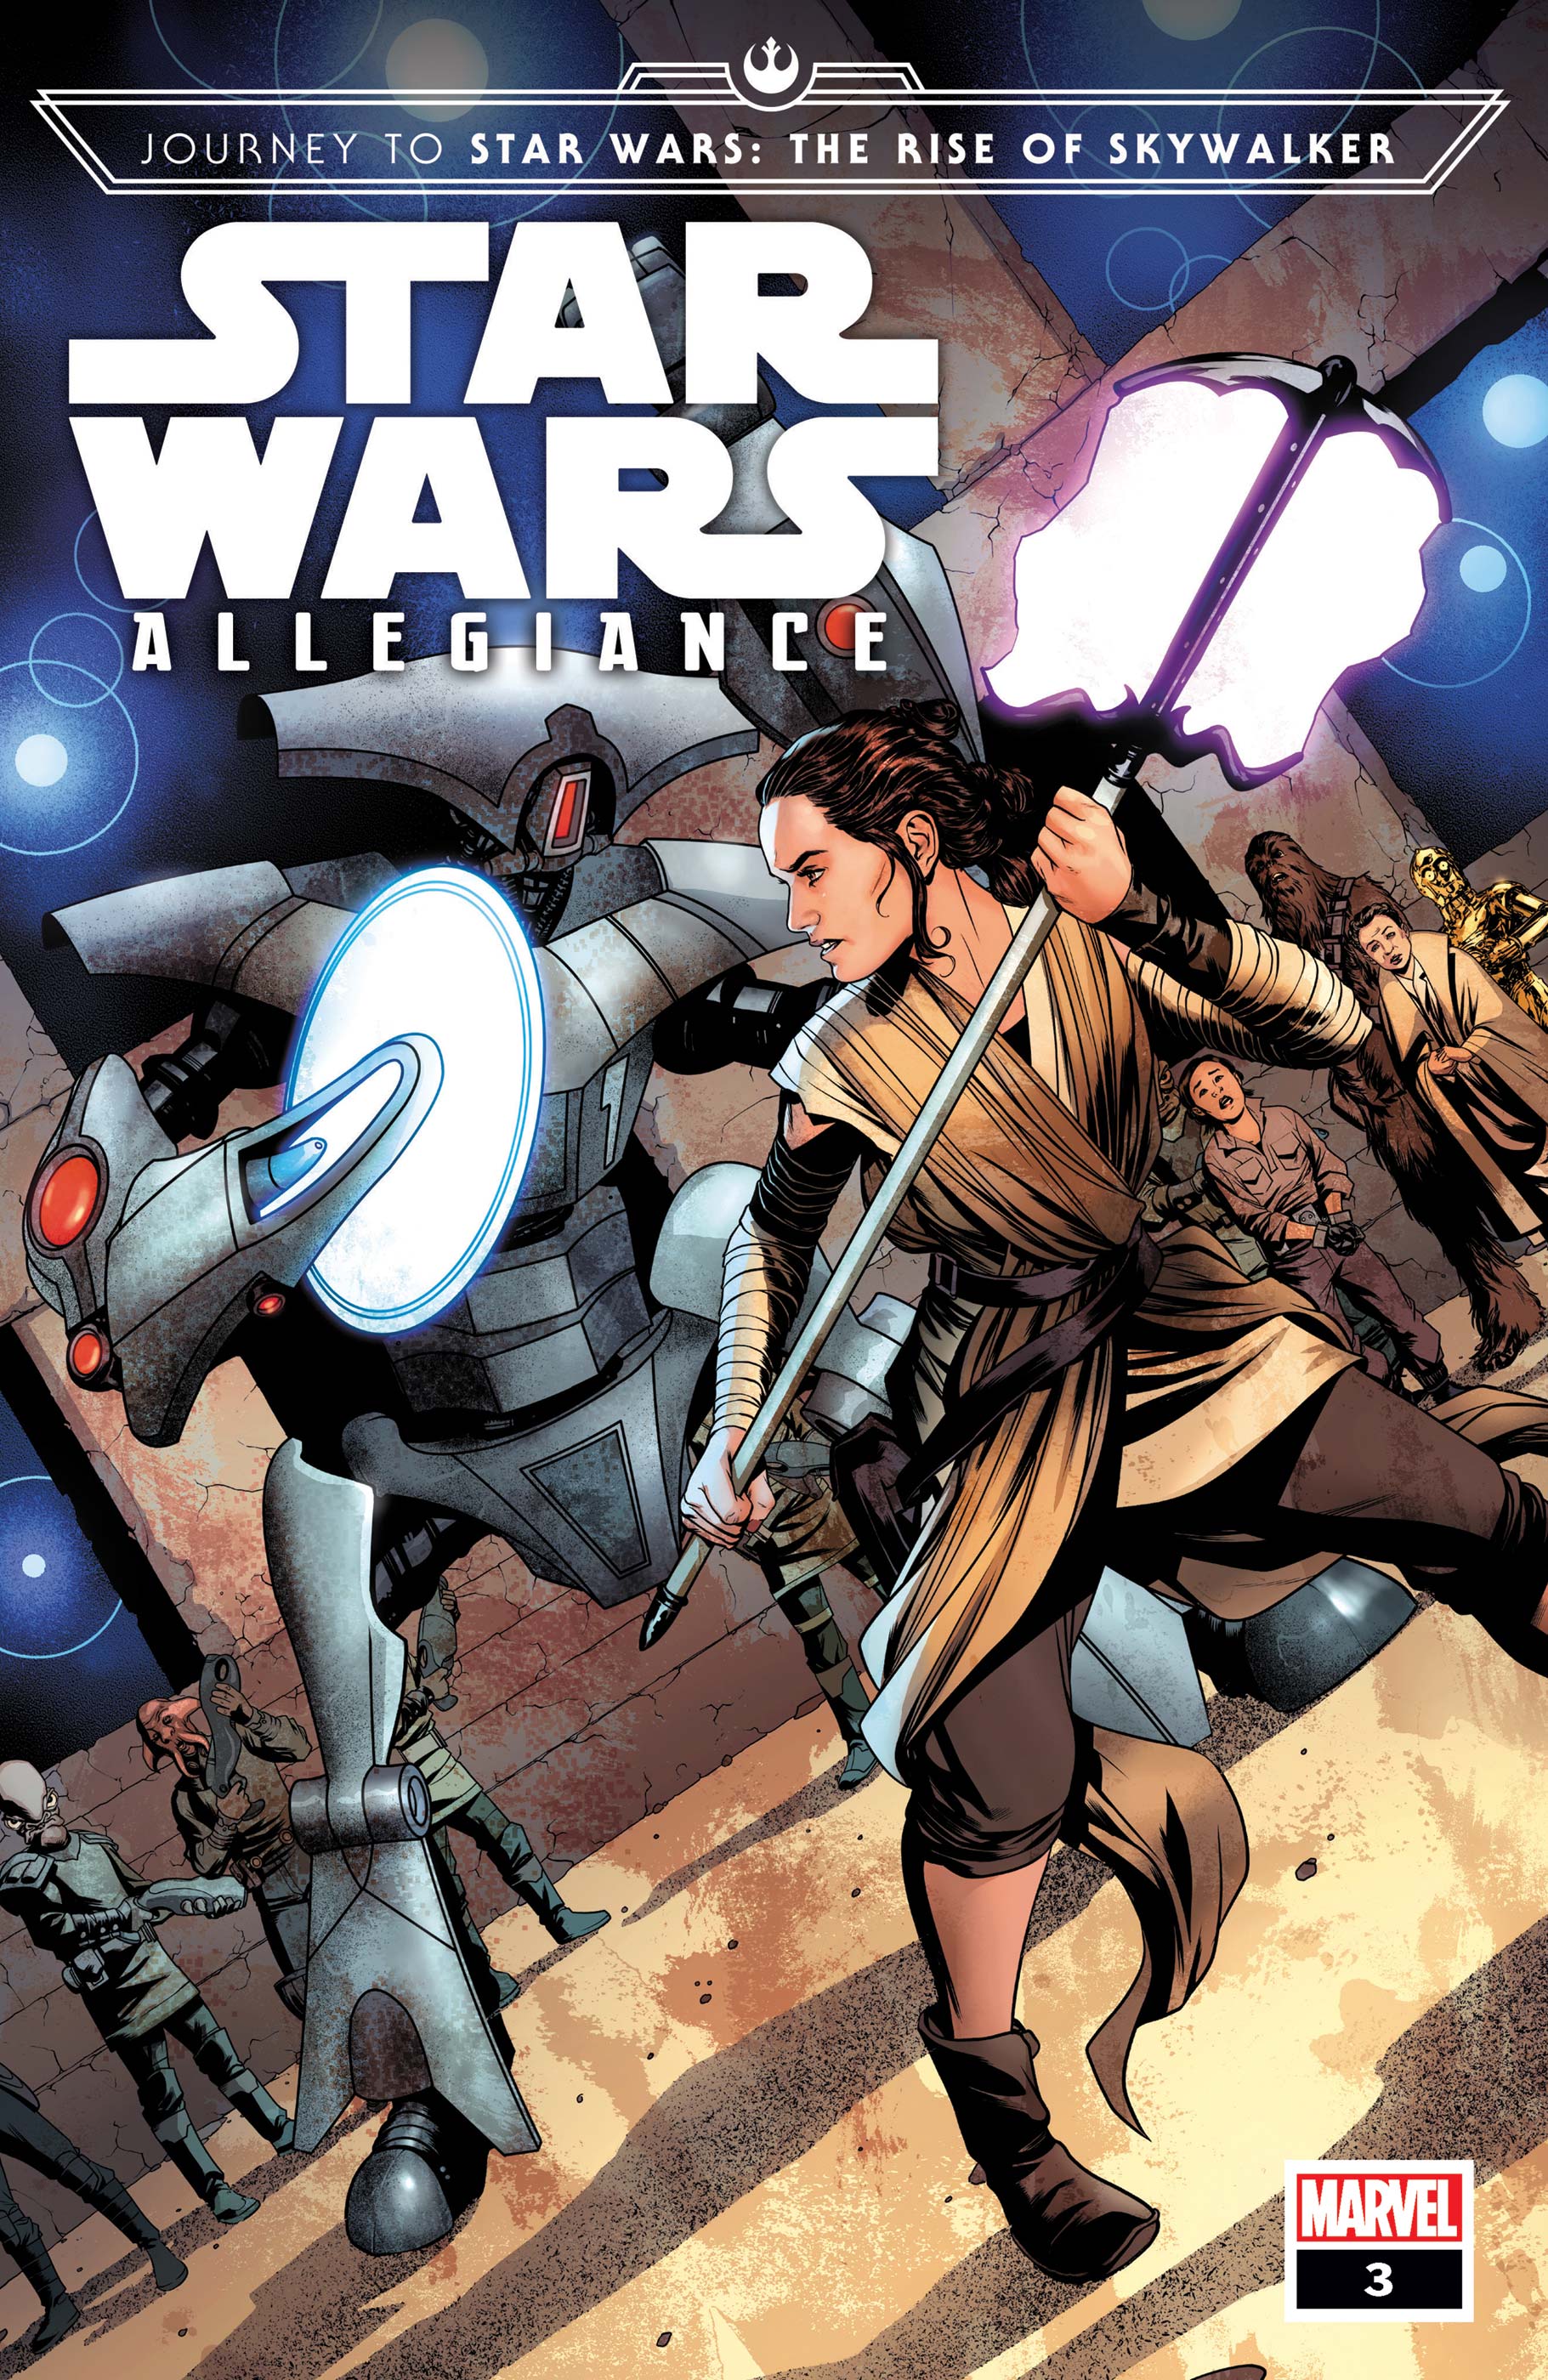 Journey to star wars the rise of skywalker allegiance 3